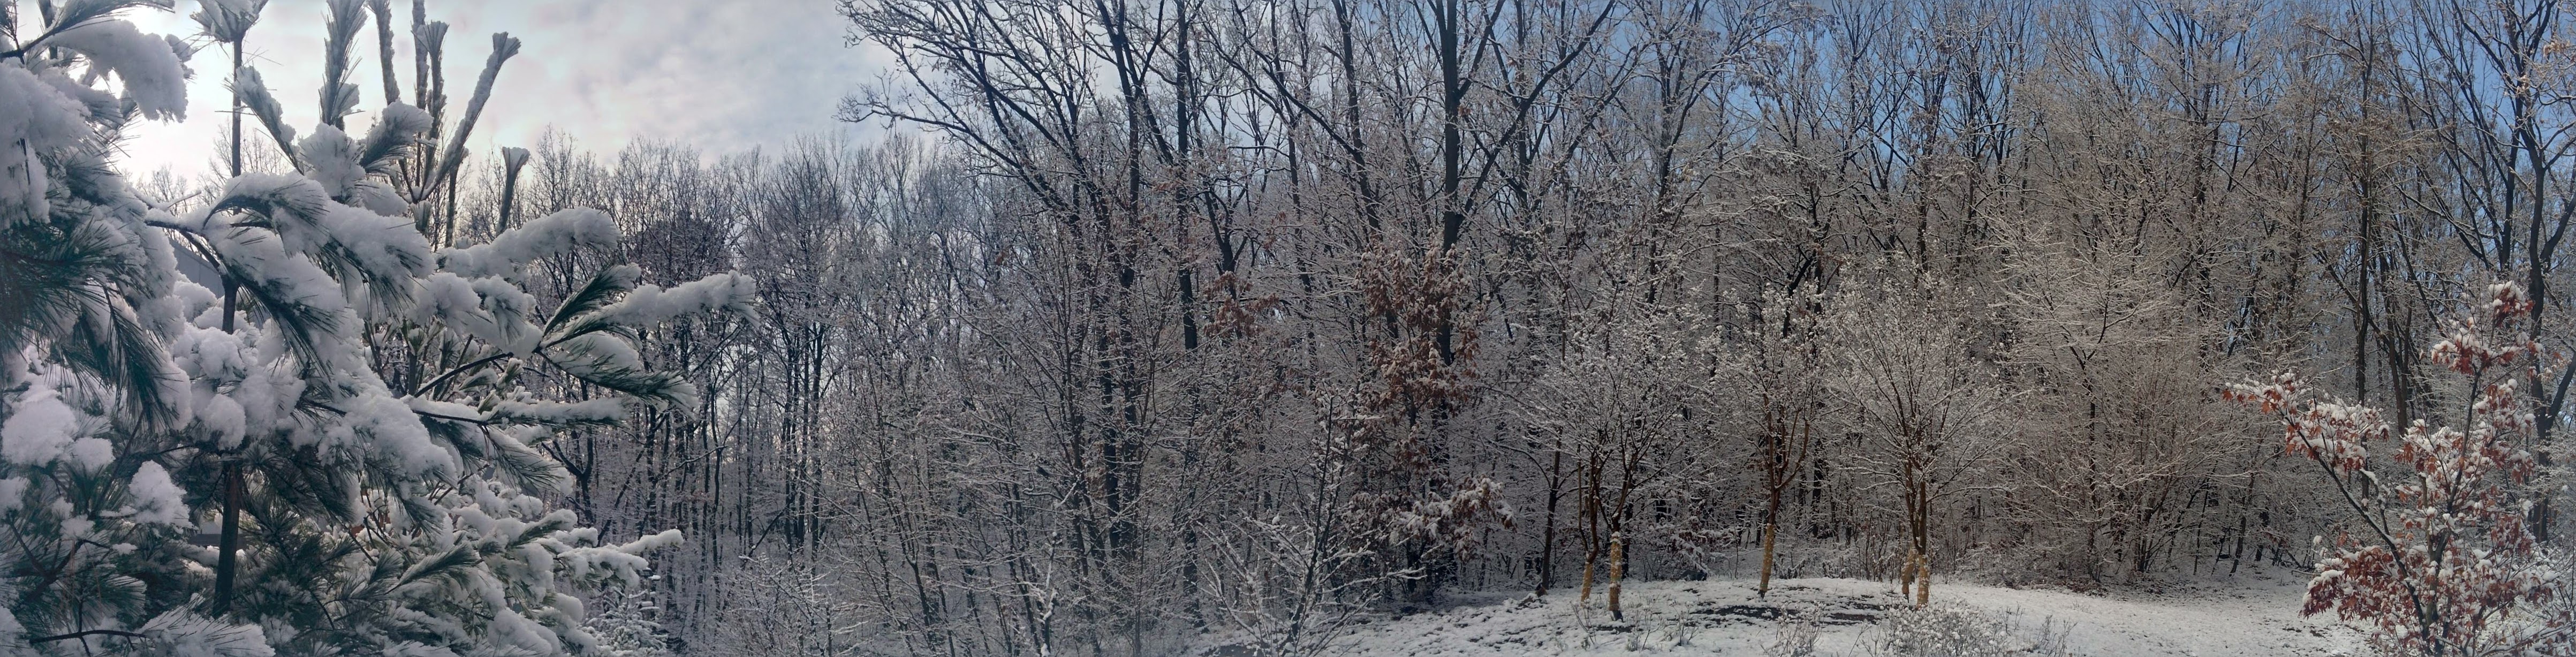 IMG_20151216_143231-PANO.jpg 눈꽃이 핀 상수리나무 숲 (파노라마 사진)